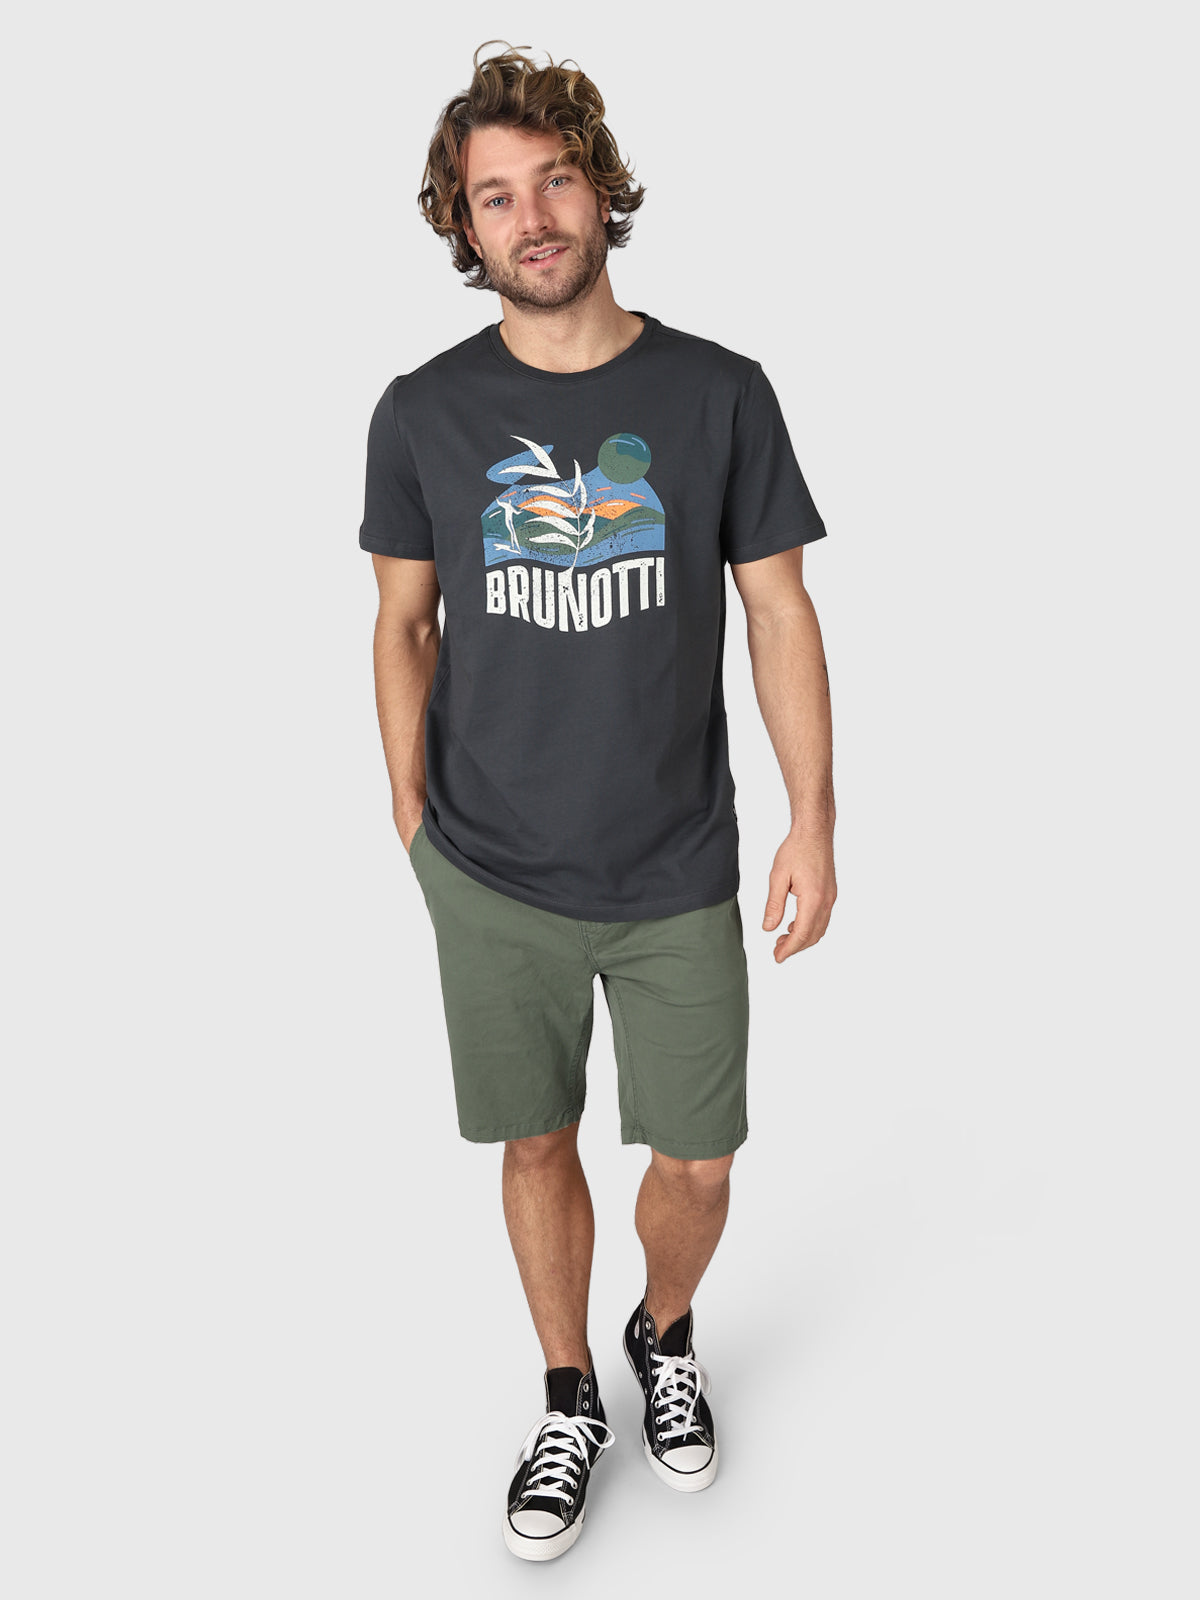 Funhorizon Herren T-Shirt | Grau